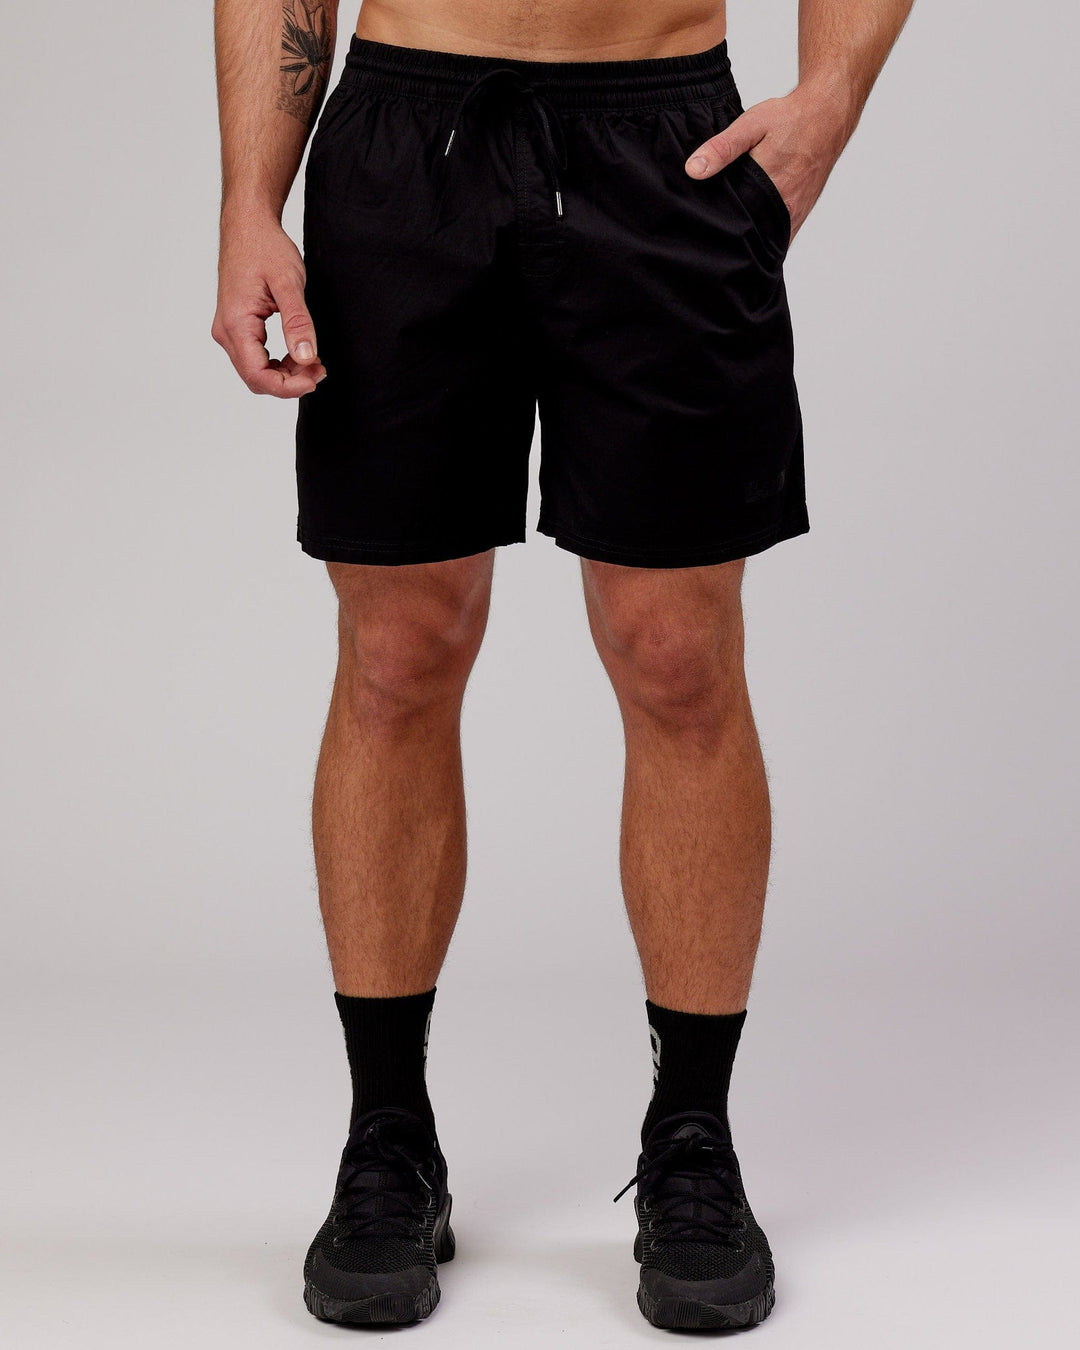 Daily Shorts - Black-Black